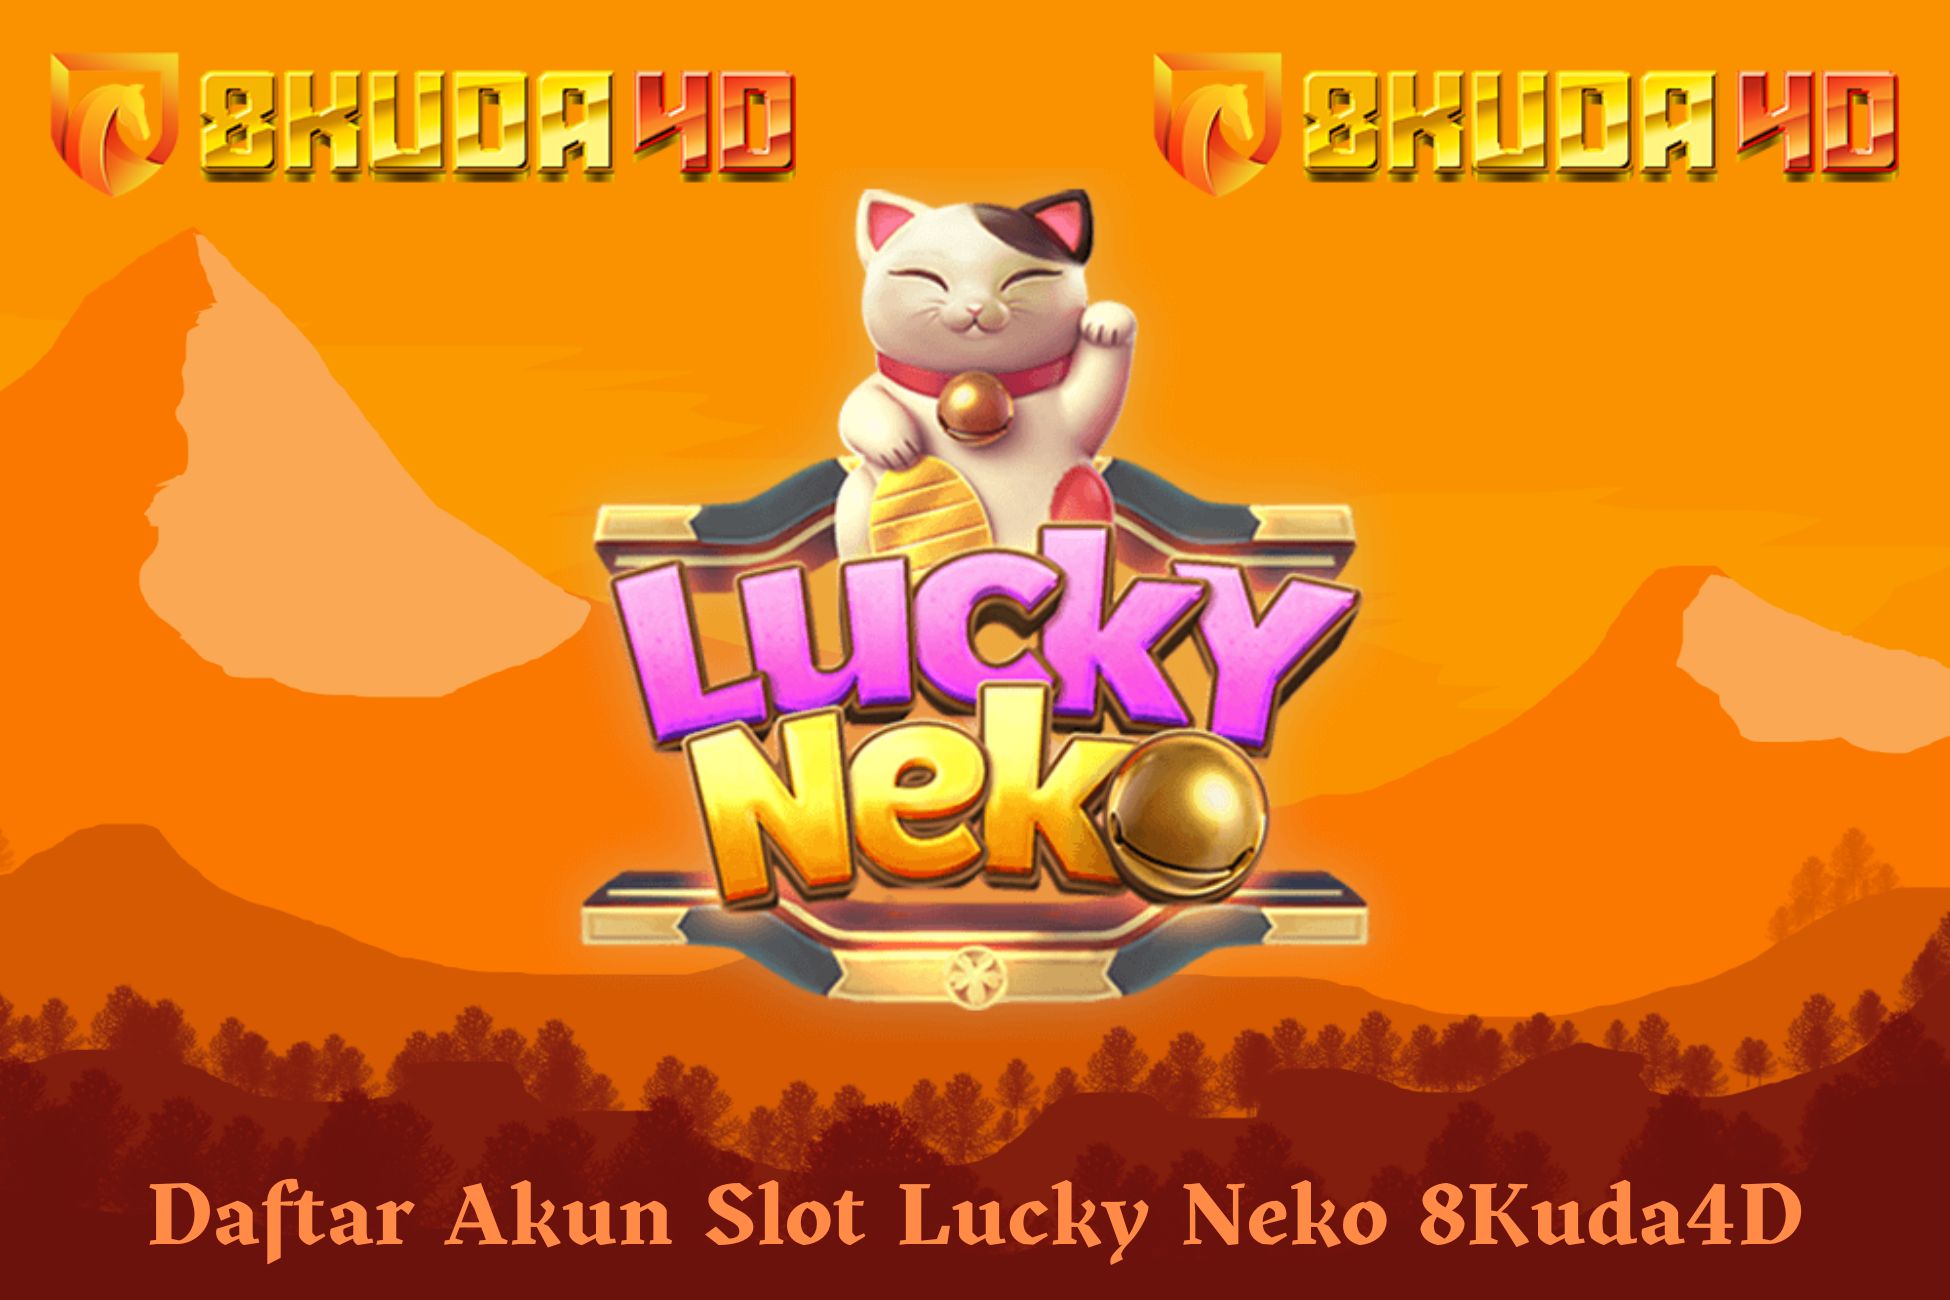 Daftar Akun Slot Lucky Neko 8Kuda4D